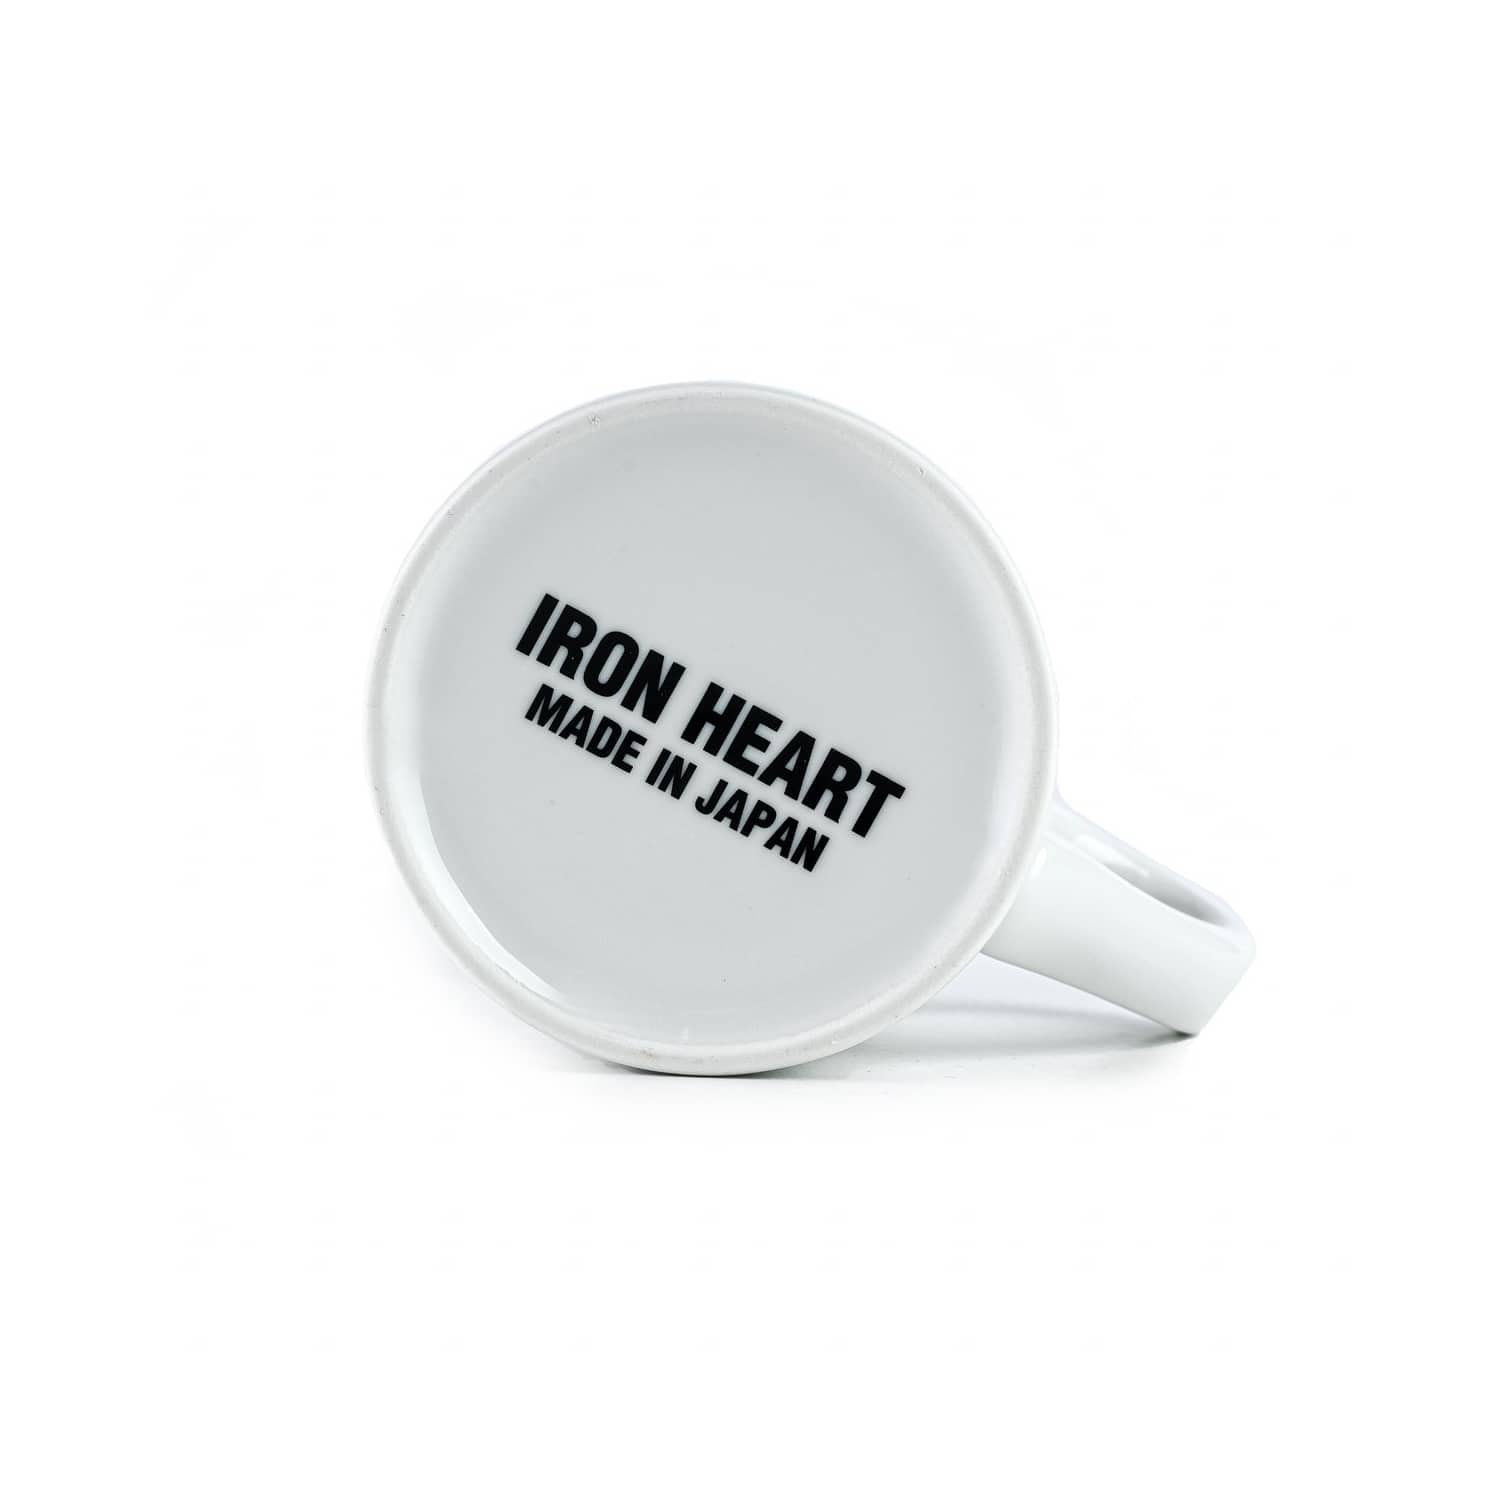 IHSH-MUG-MOTO Iron Heart Motorcycle Logo Mug FINAL SALE